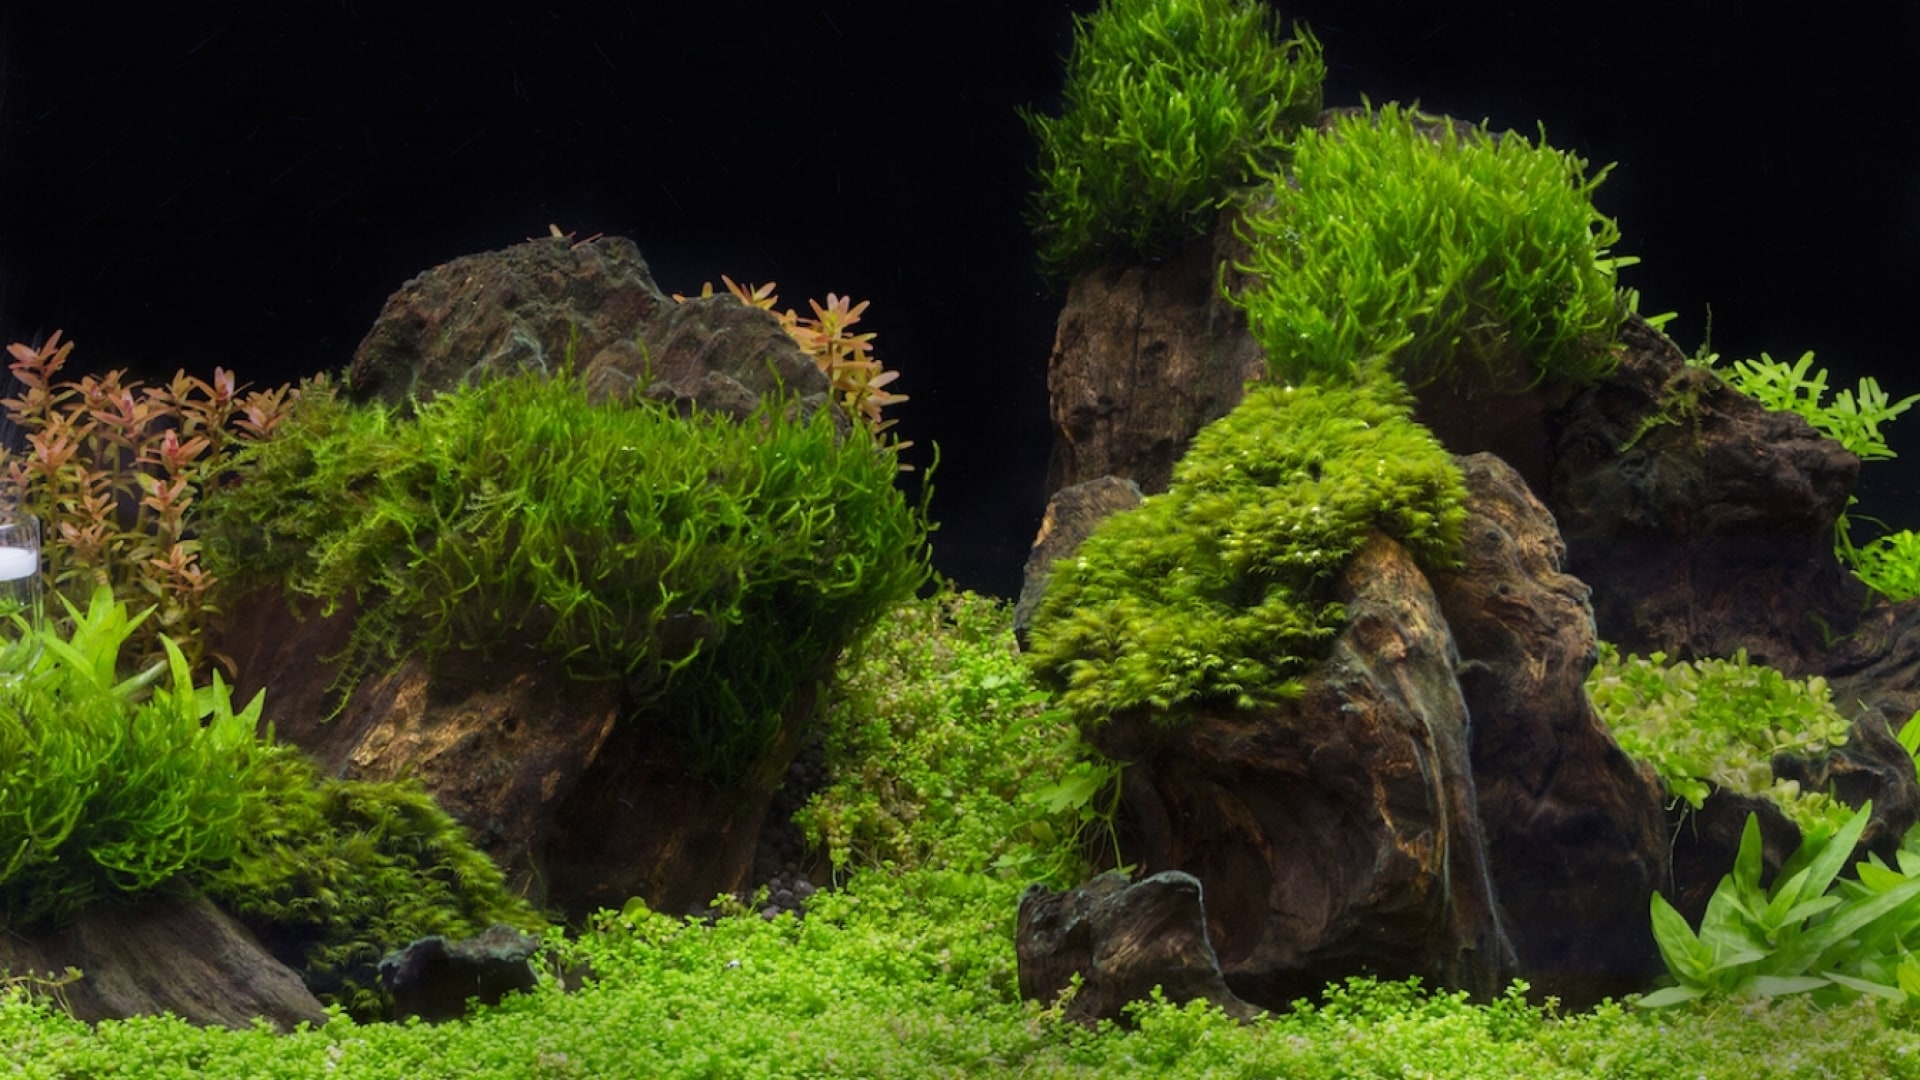 acquario piante e rocce - acquario zen